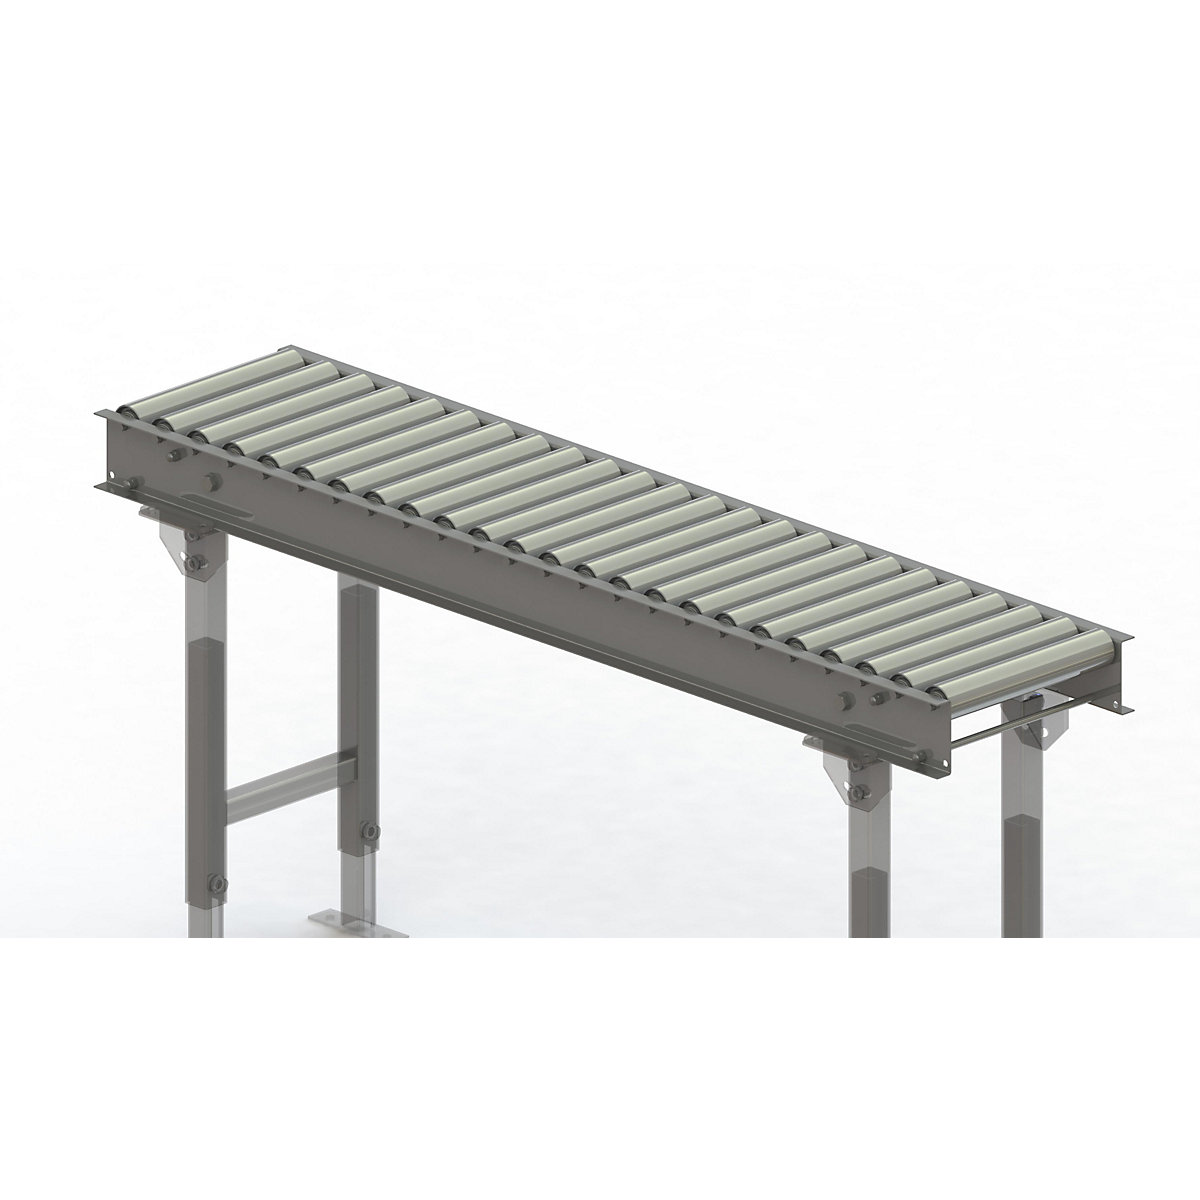 Gura – Roller conveyor, steel frame with zinc plated steel rollers, track width 300 mm, distance between axles 62.5 mm, length 1.5 m